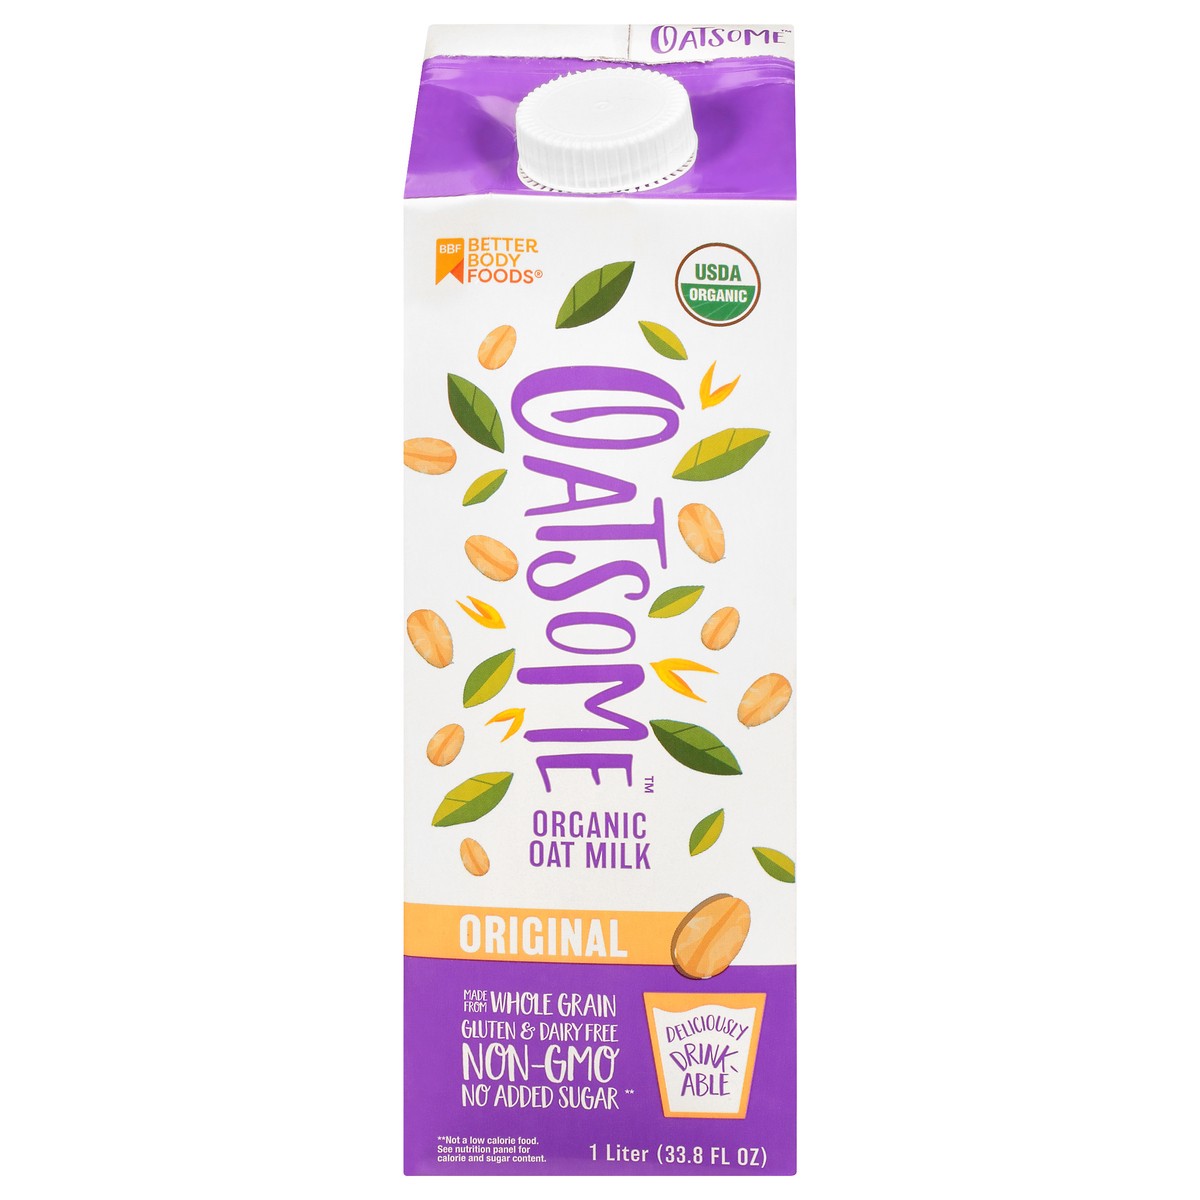 slide 1 of 21, BetterBody Foods Oatsome Organic Original Oat Milk, 1 liter